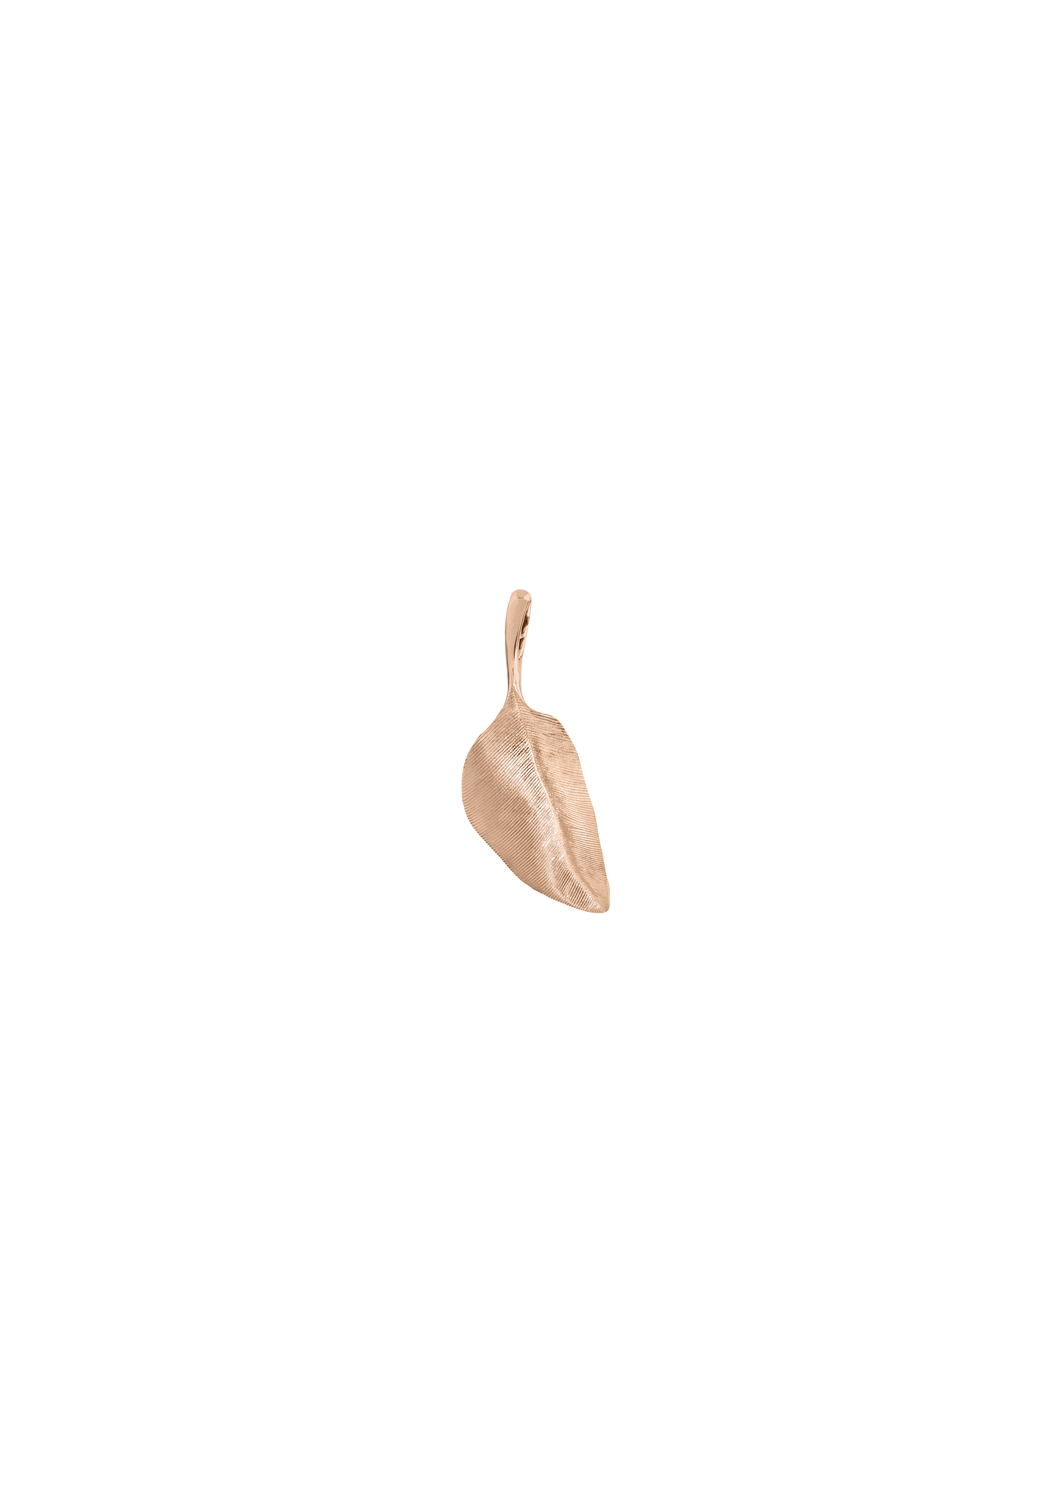 Ole Lynggaard Leaves 18K Rose Gold Leaf Pendant | Ref. A3008-703 | OsterJewelers.com